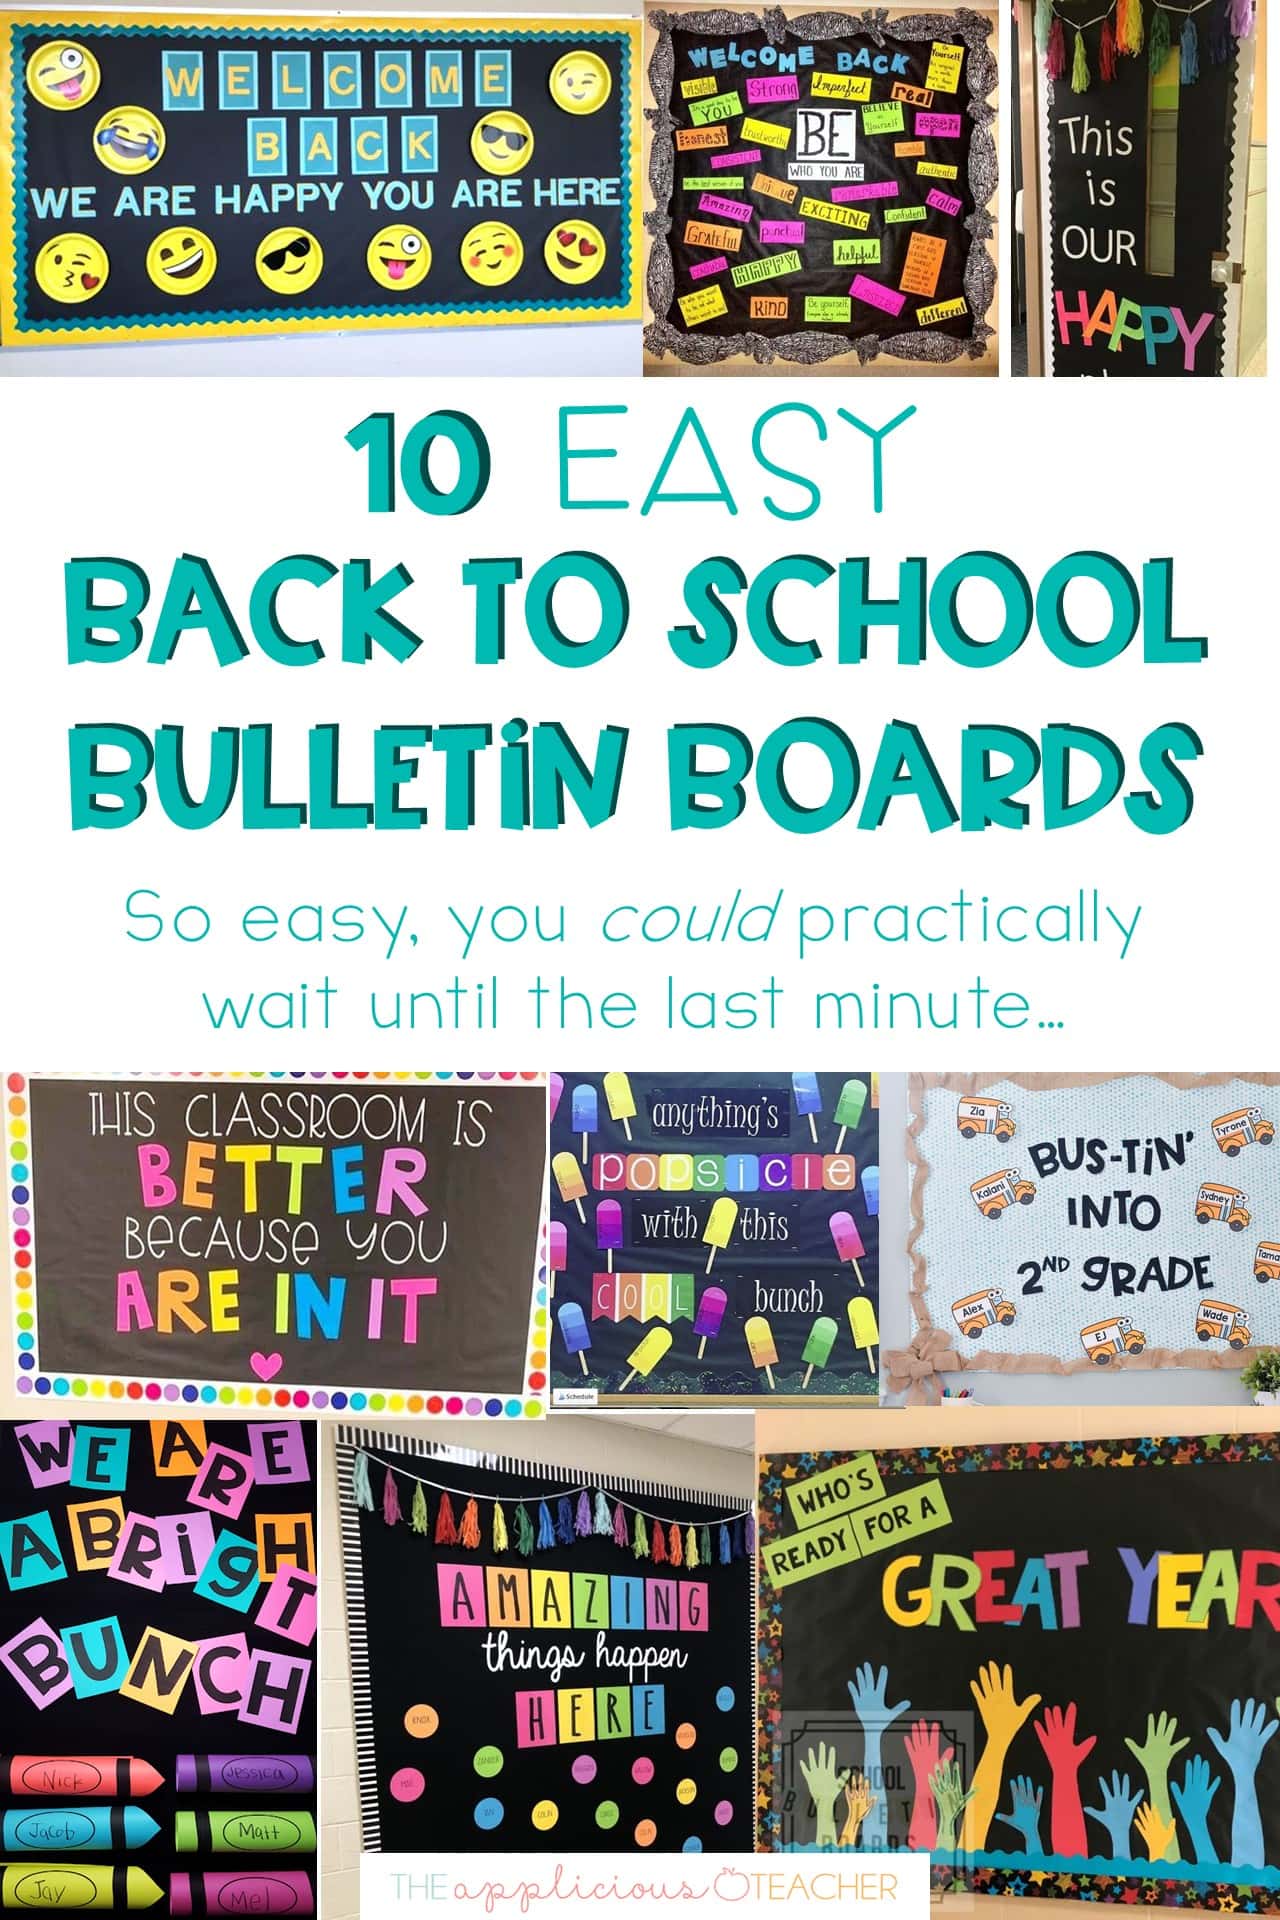 10 Easy Back To School Bulletin Boards - The Applicious Teacher